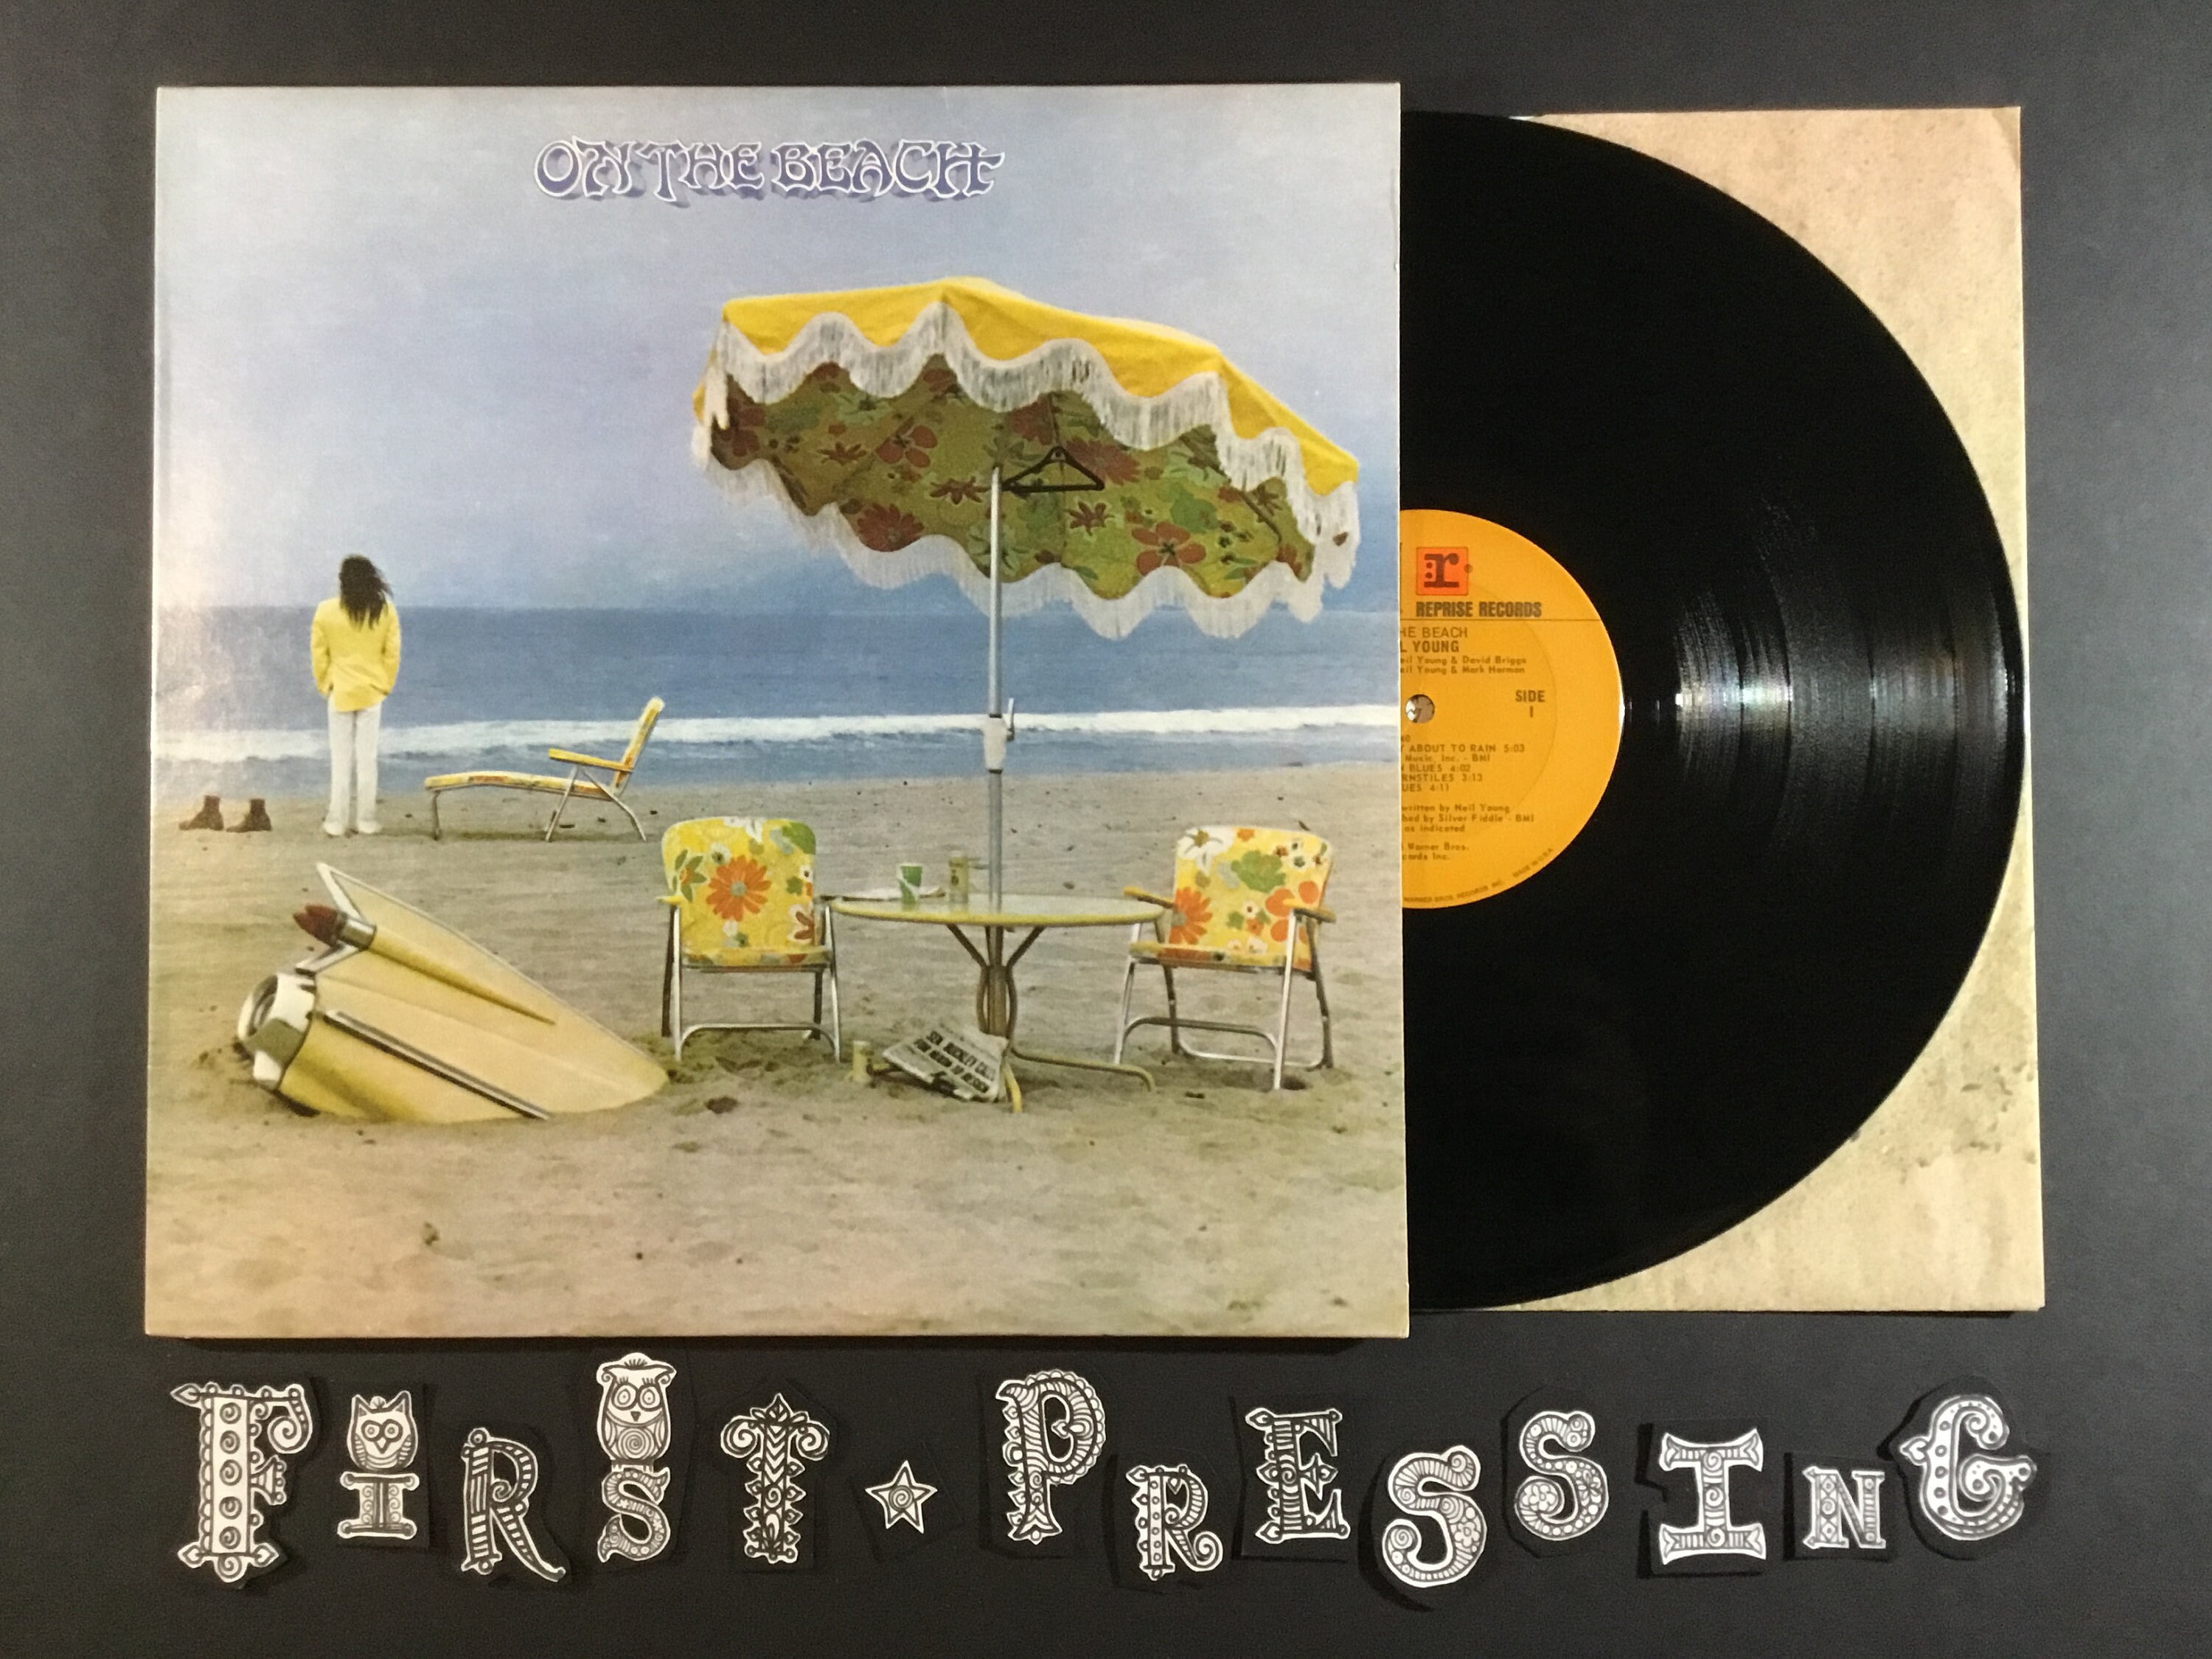 NEIL YOUNG On The Beach LP original vinyl record album